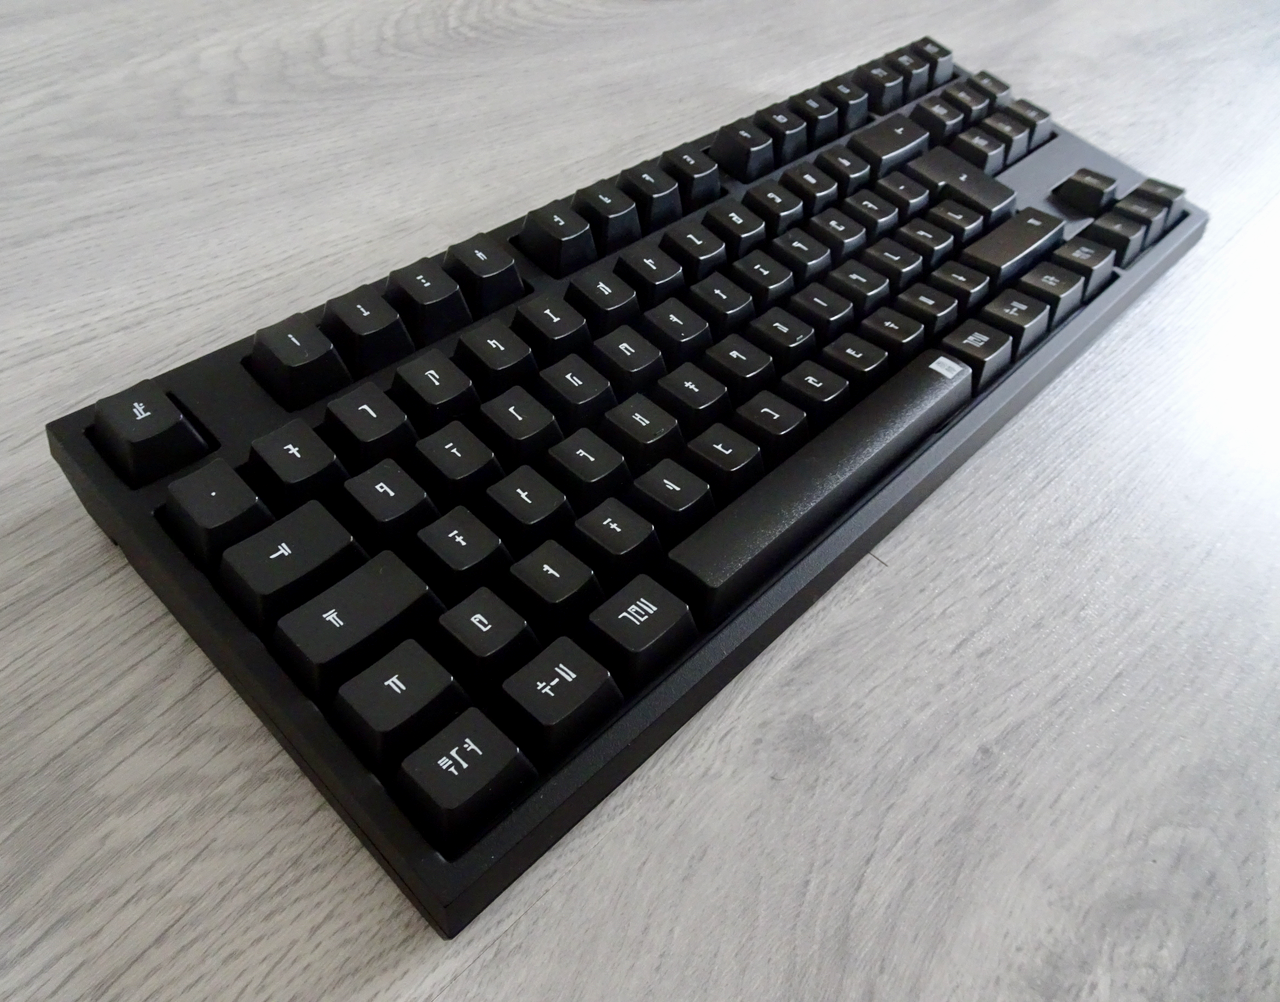 Manufactured keyboard #2